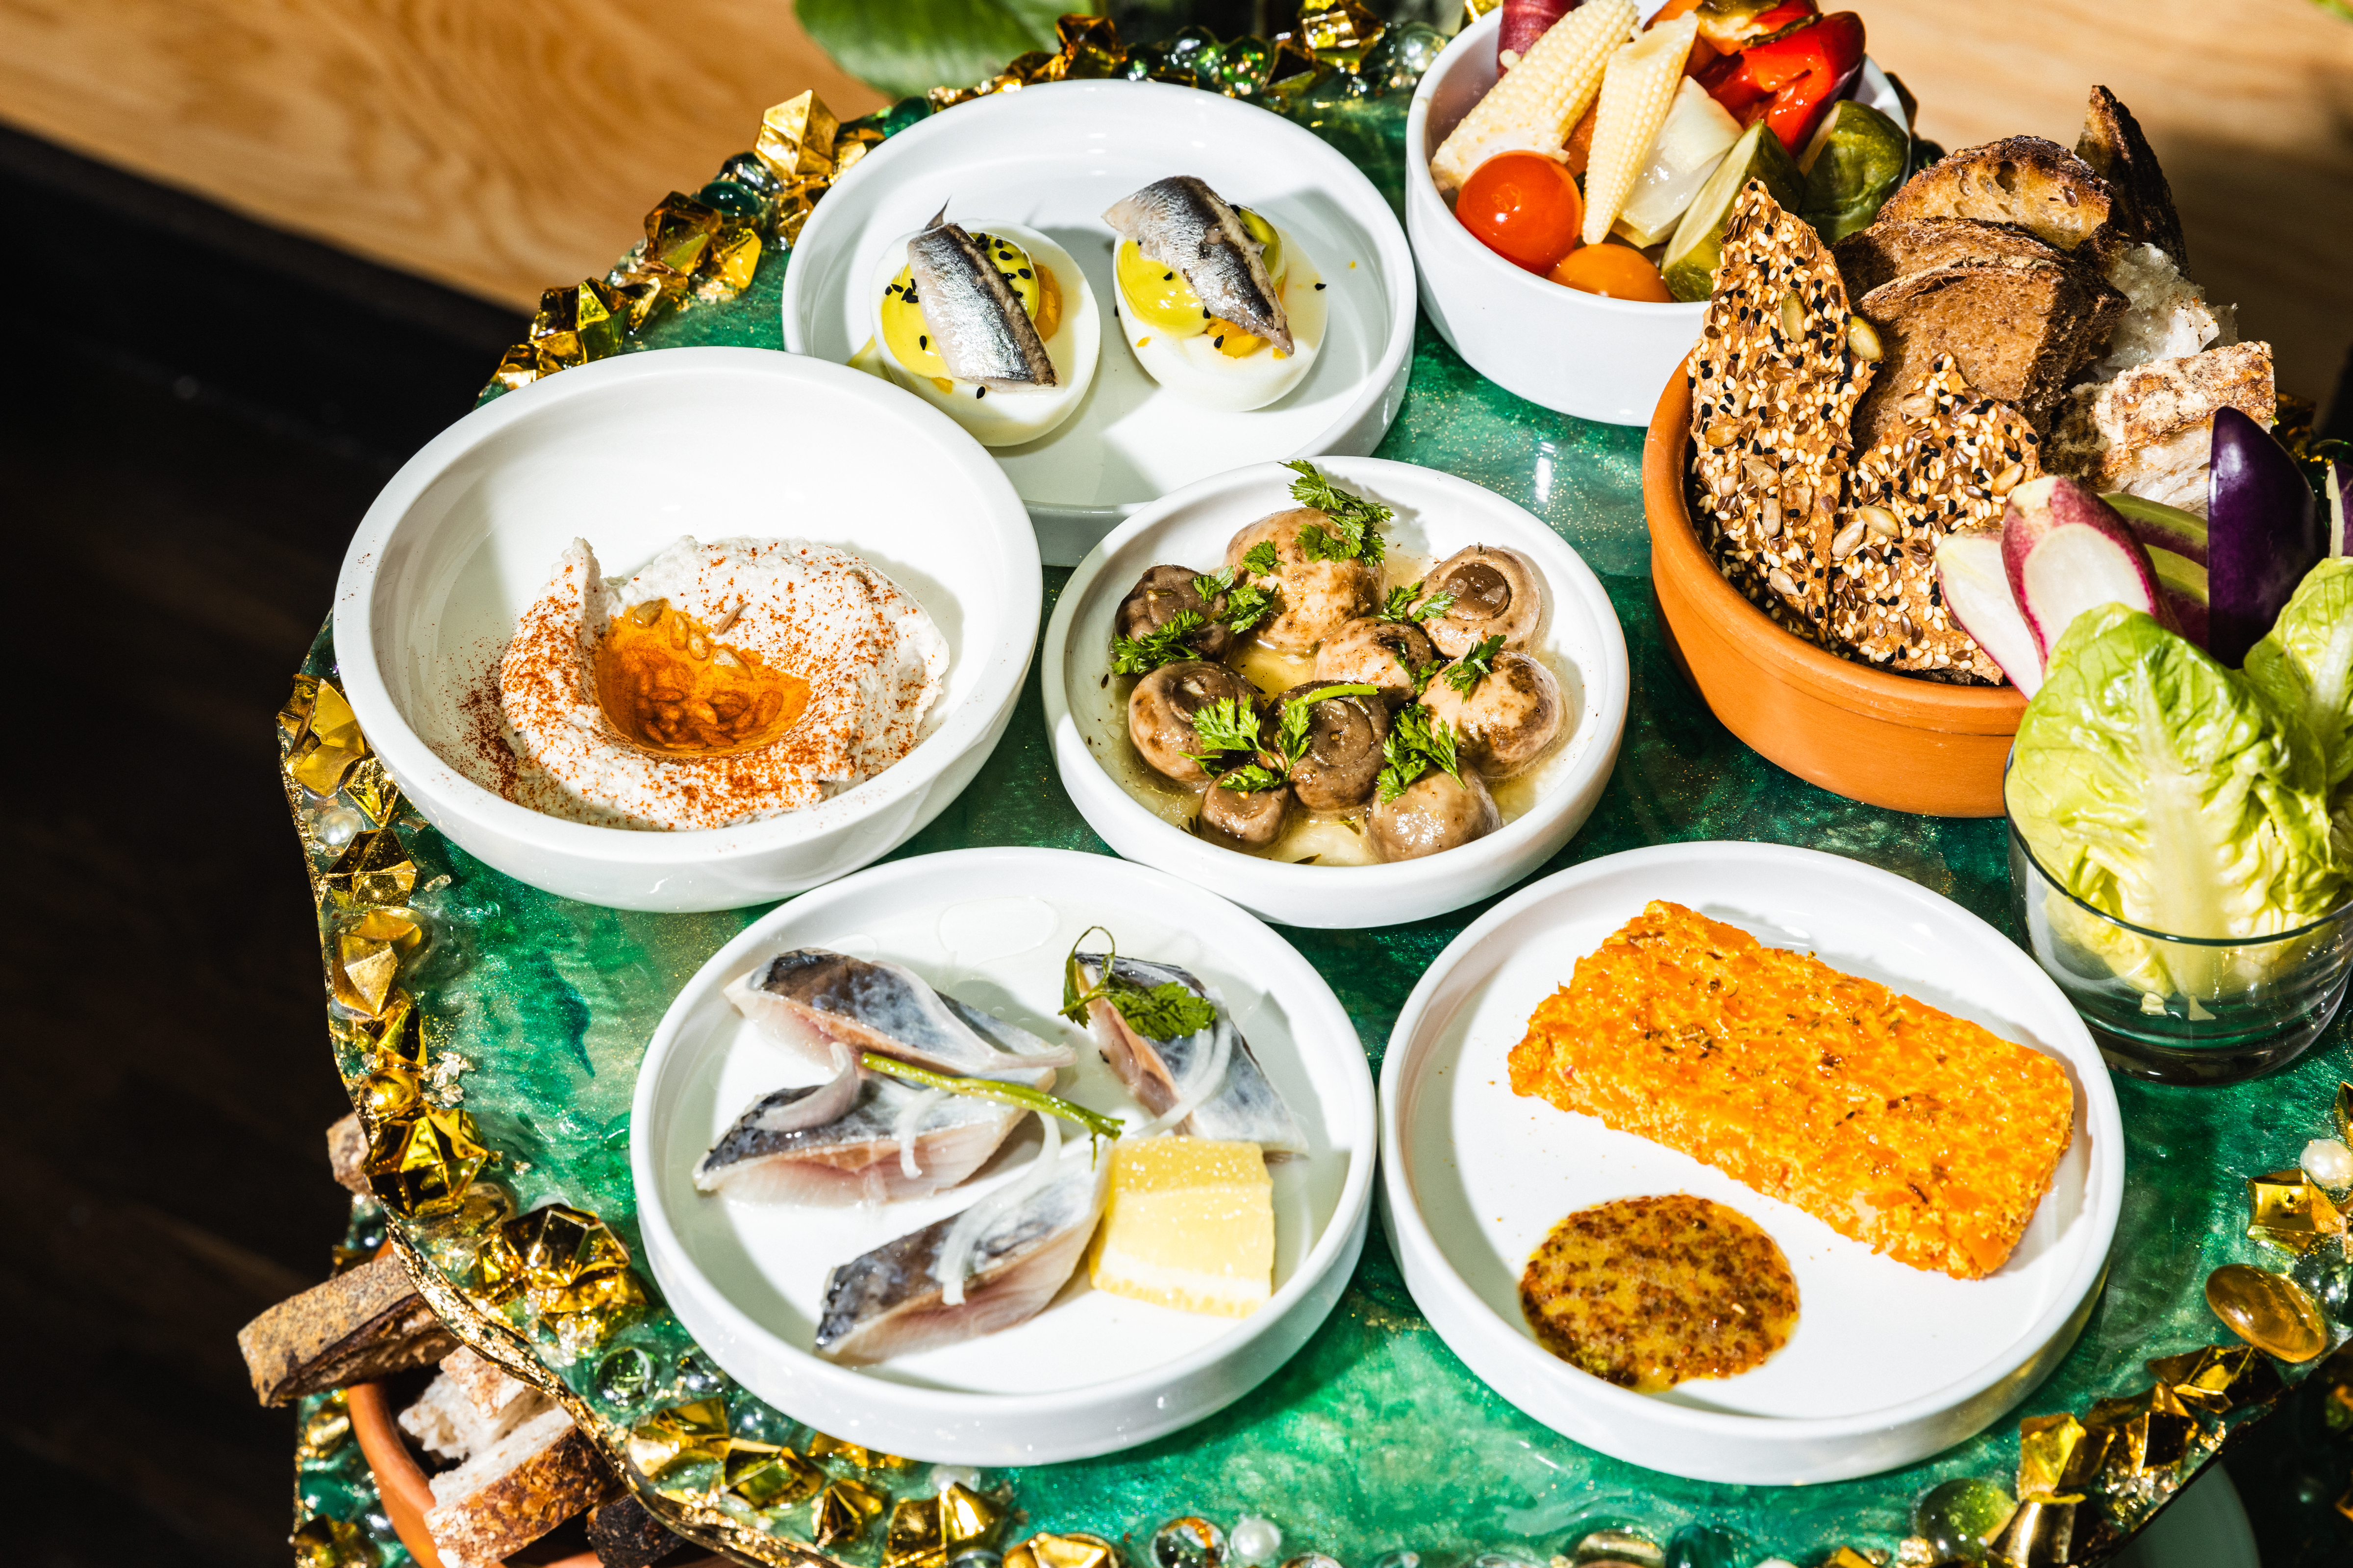 A display of small plates of Ukrainian food.